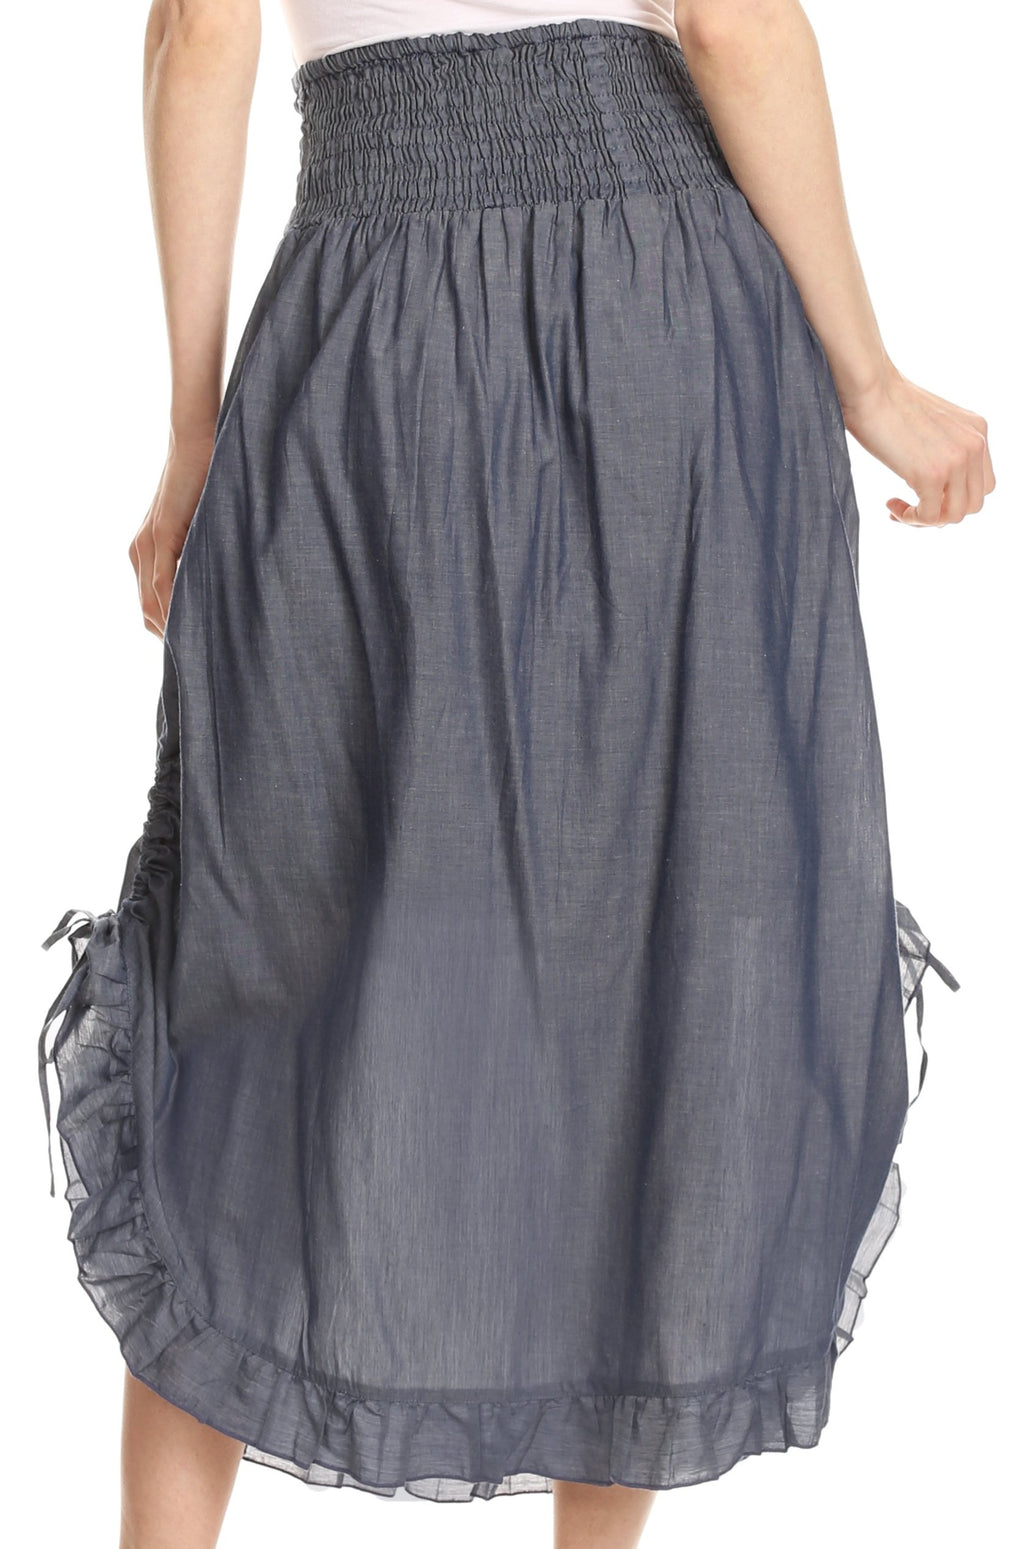 Sakkas Coco Long Cotton Ruffle Skirt with Pockets and Elastic Waistban